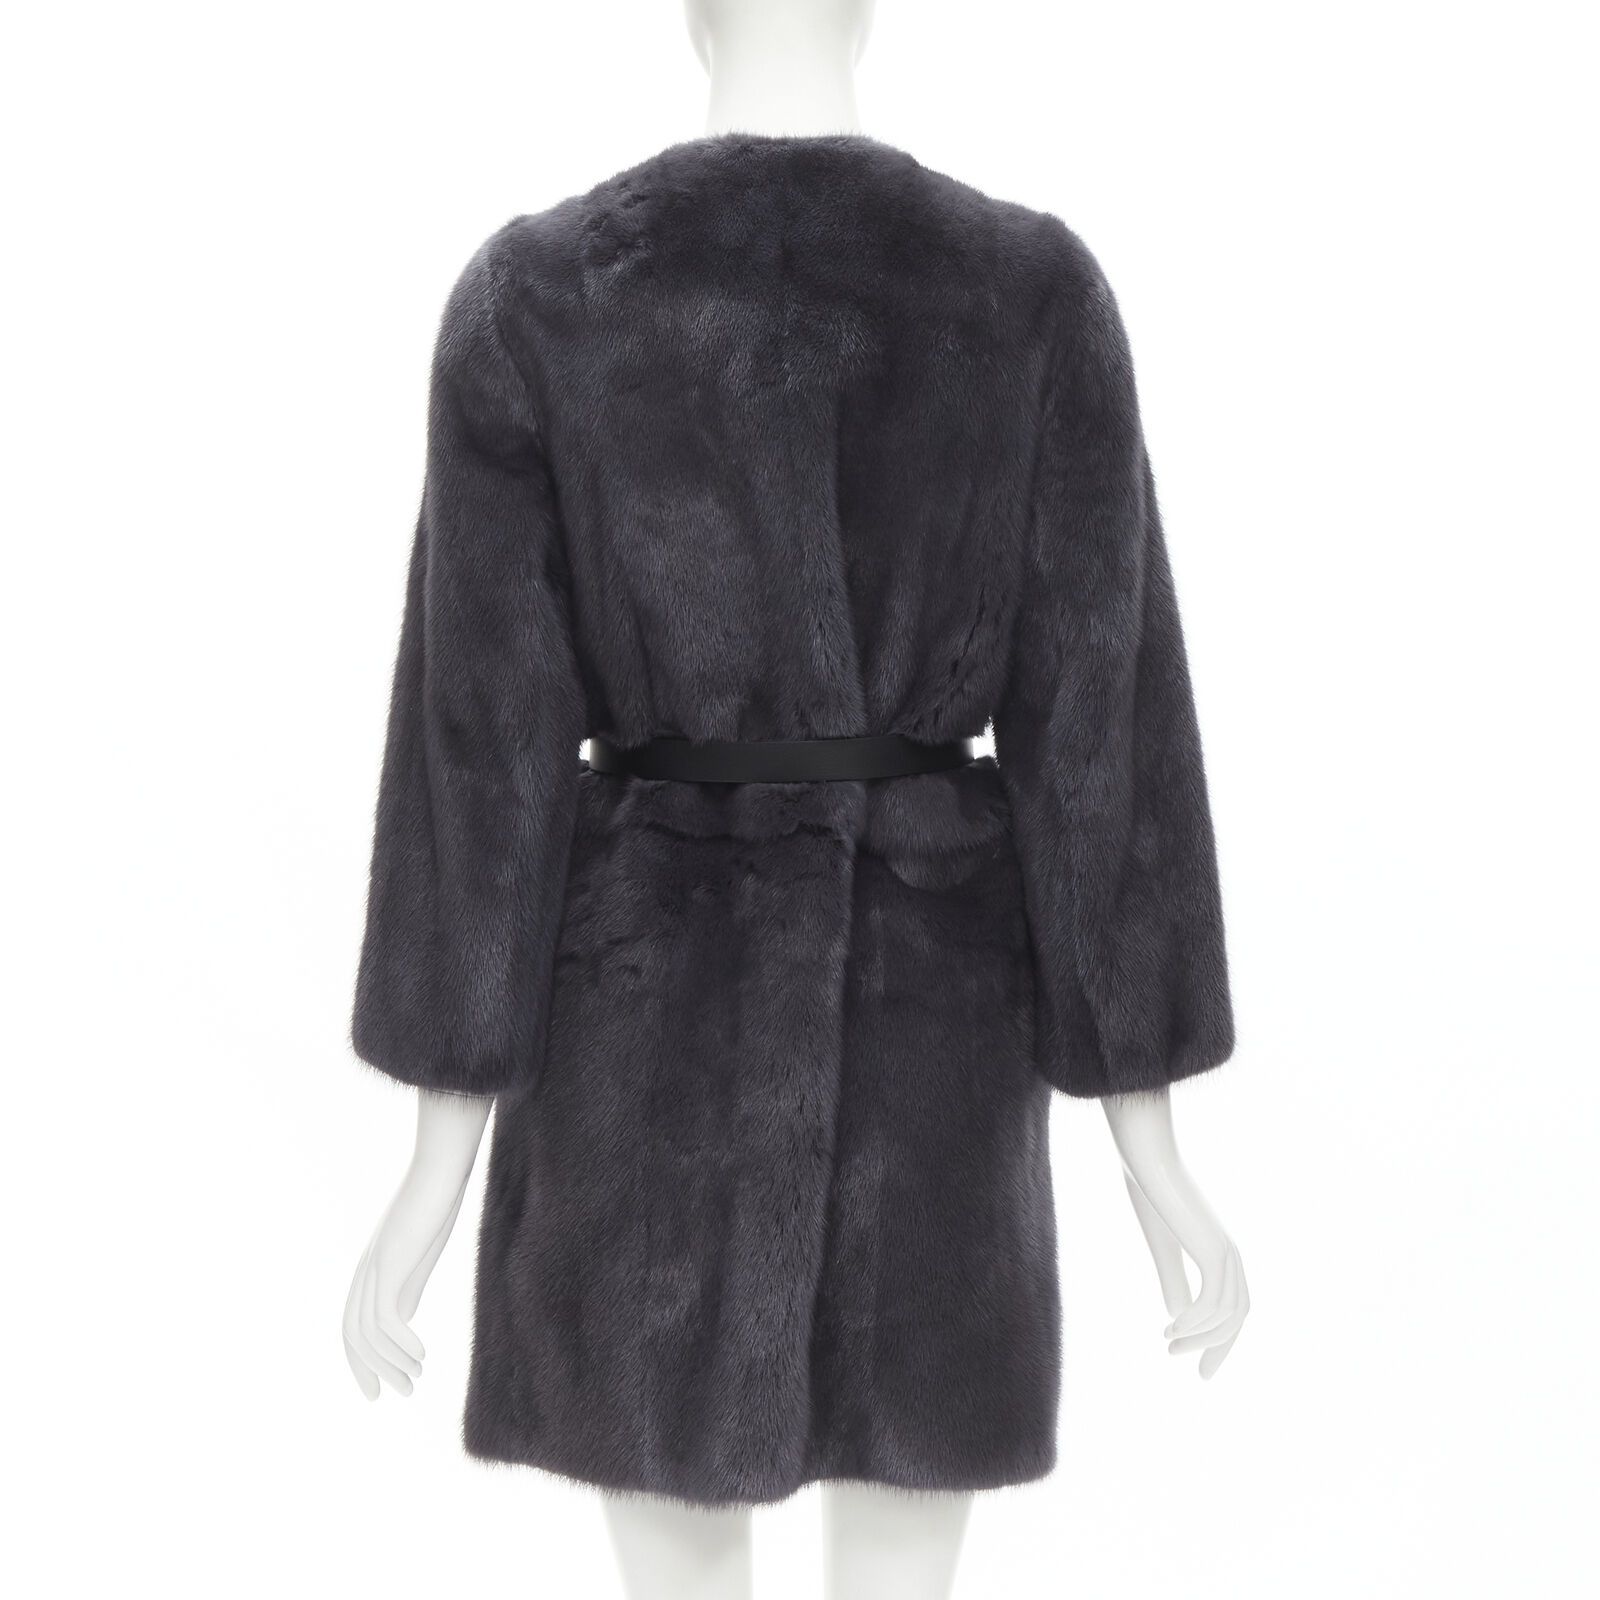 Fendi FENDI grey black fur leather 4-way reversible zip belted coat jacket IT38 Size XS / US 0-2 / IT 36-38 - 7 Thumbnail